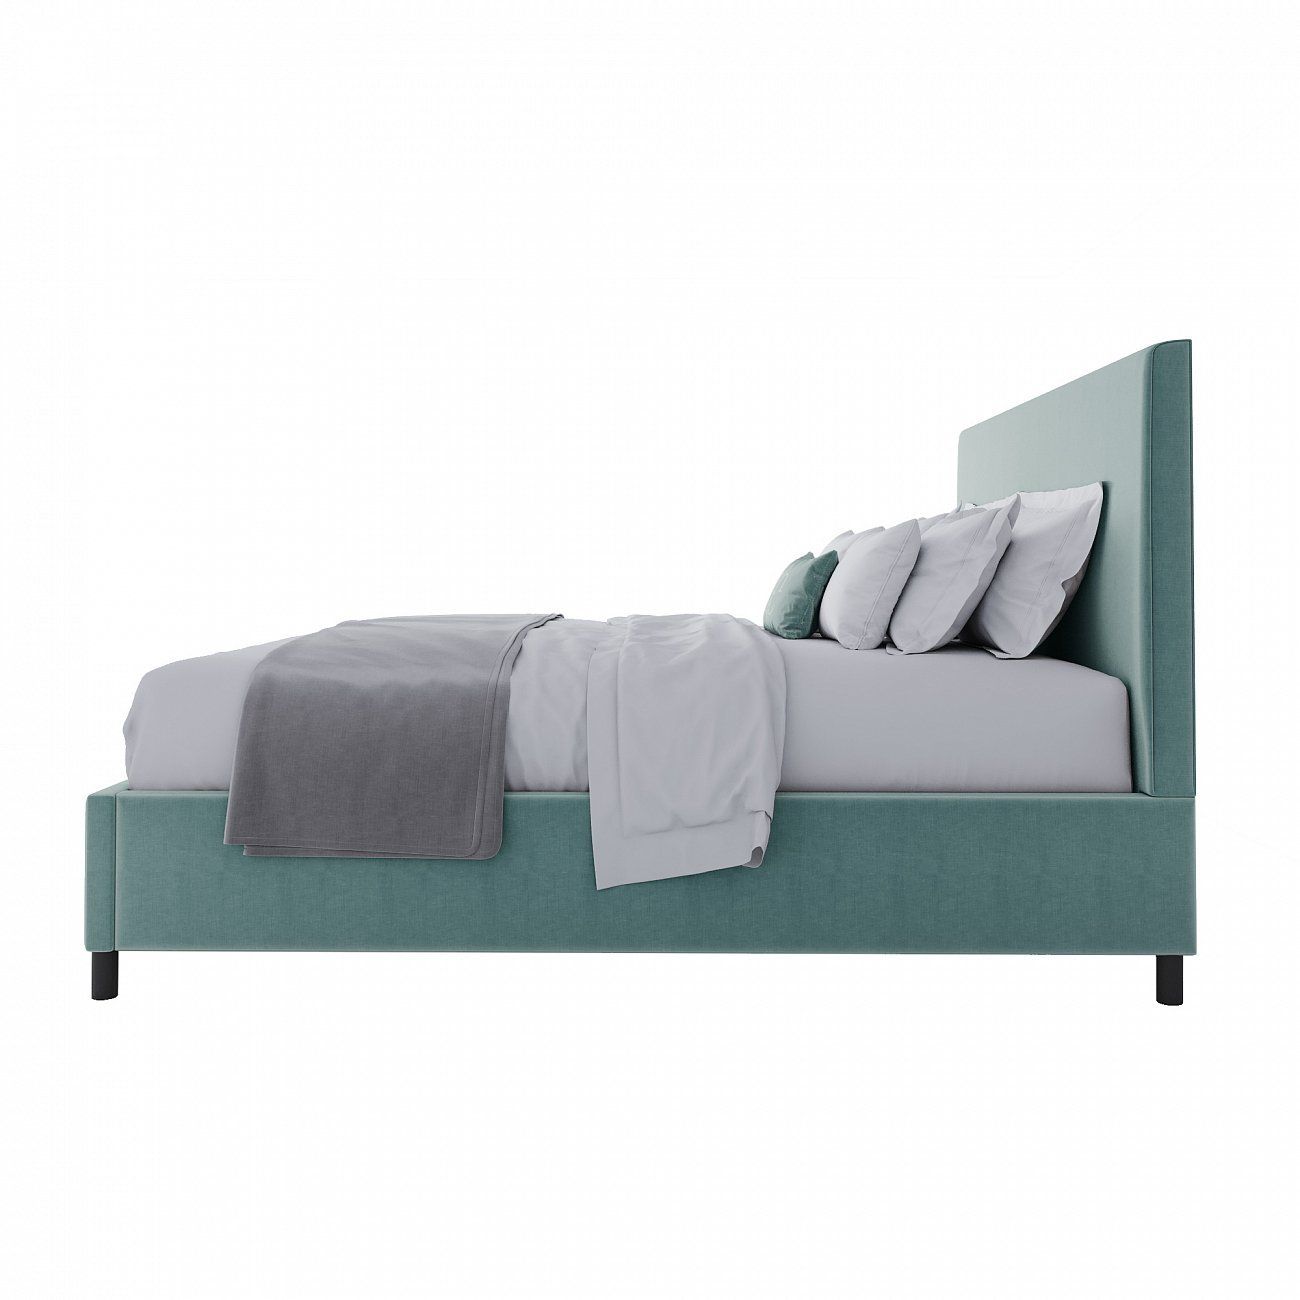 Double bed 180x200 turquoise Novac Platform